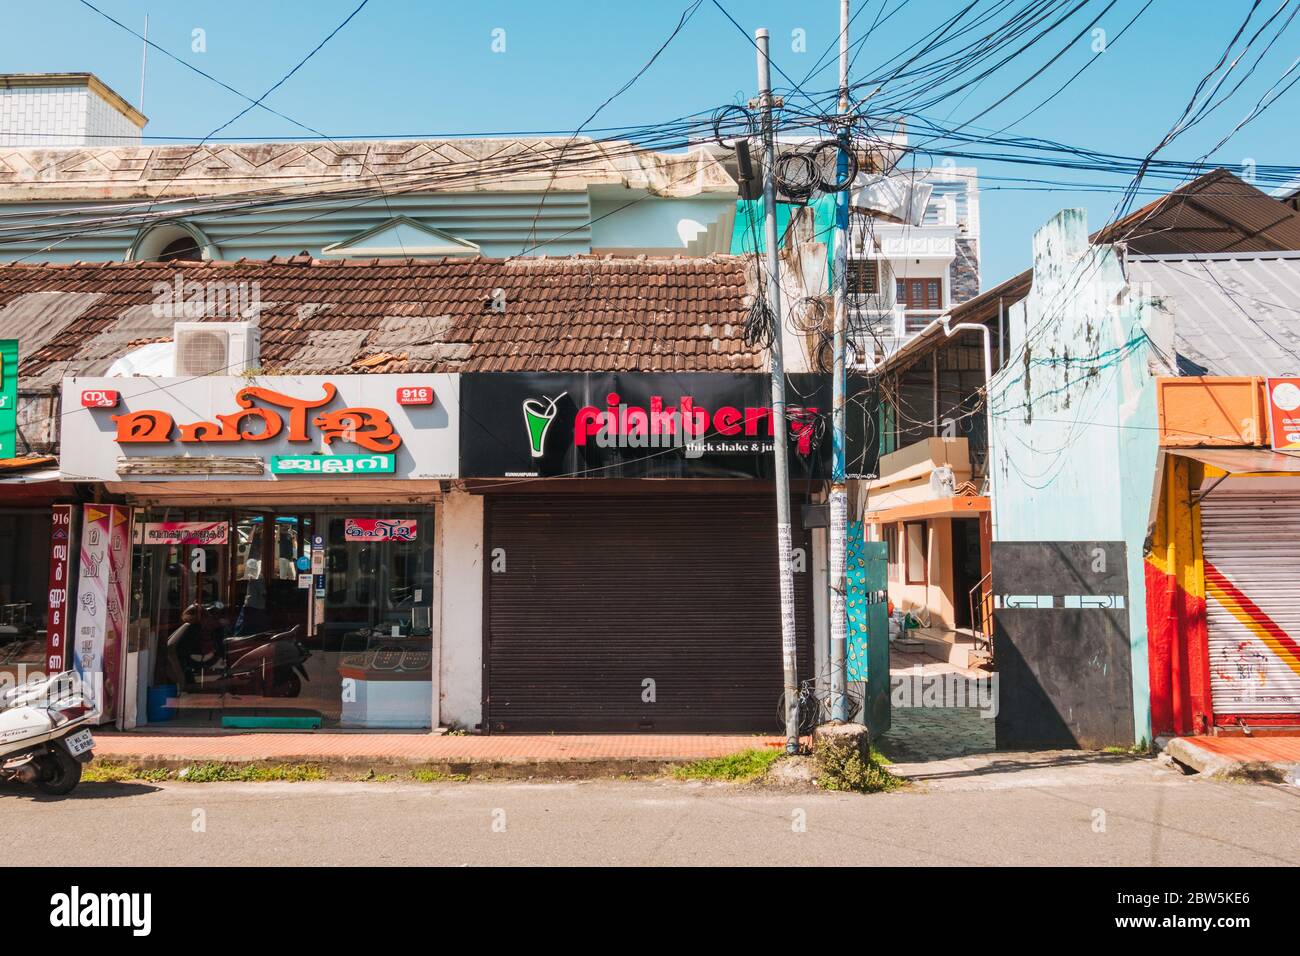 Un magasin de paknock-off à Kochi, Inde Banque D'Images